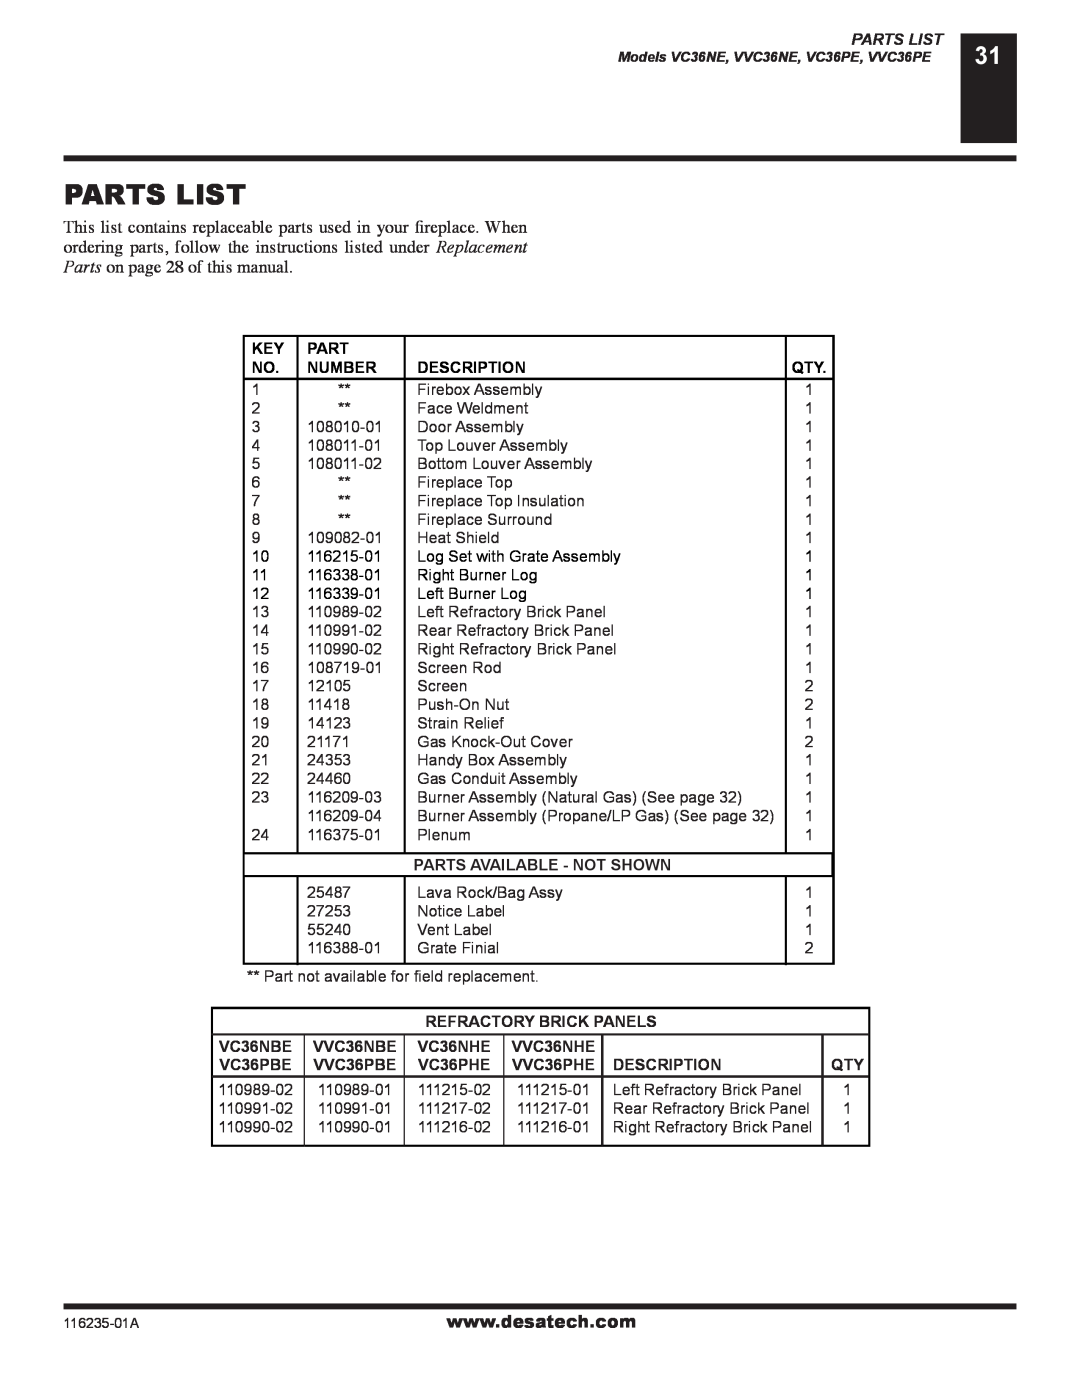 Desa (V)VC36NE Series installation manual Parts List 